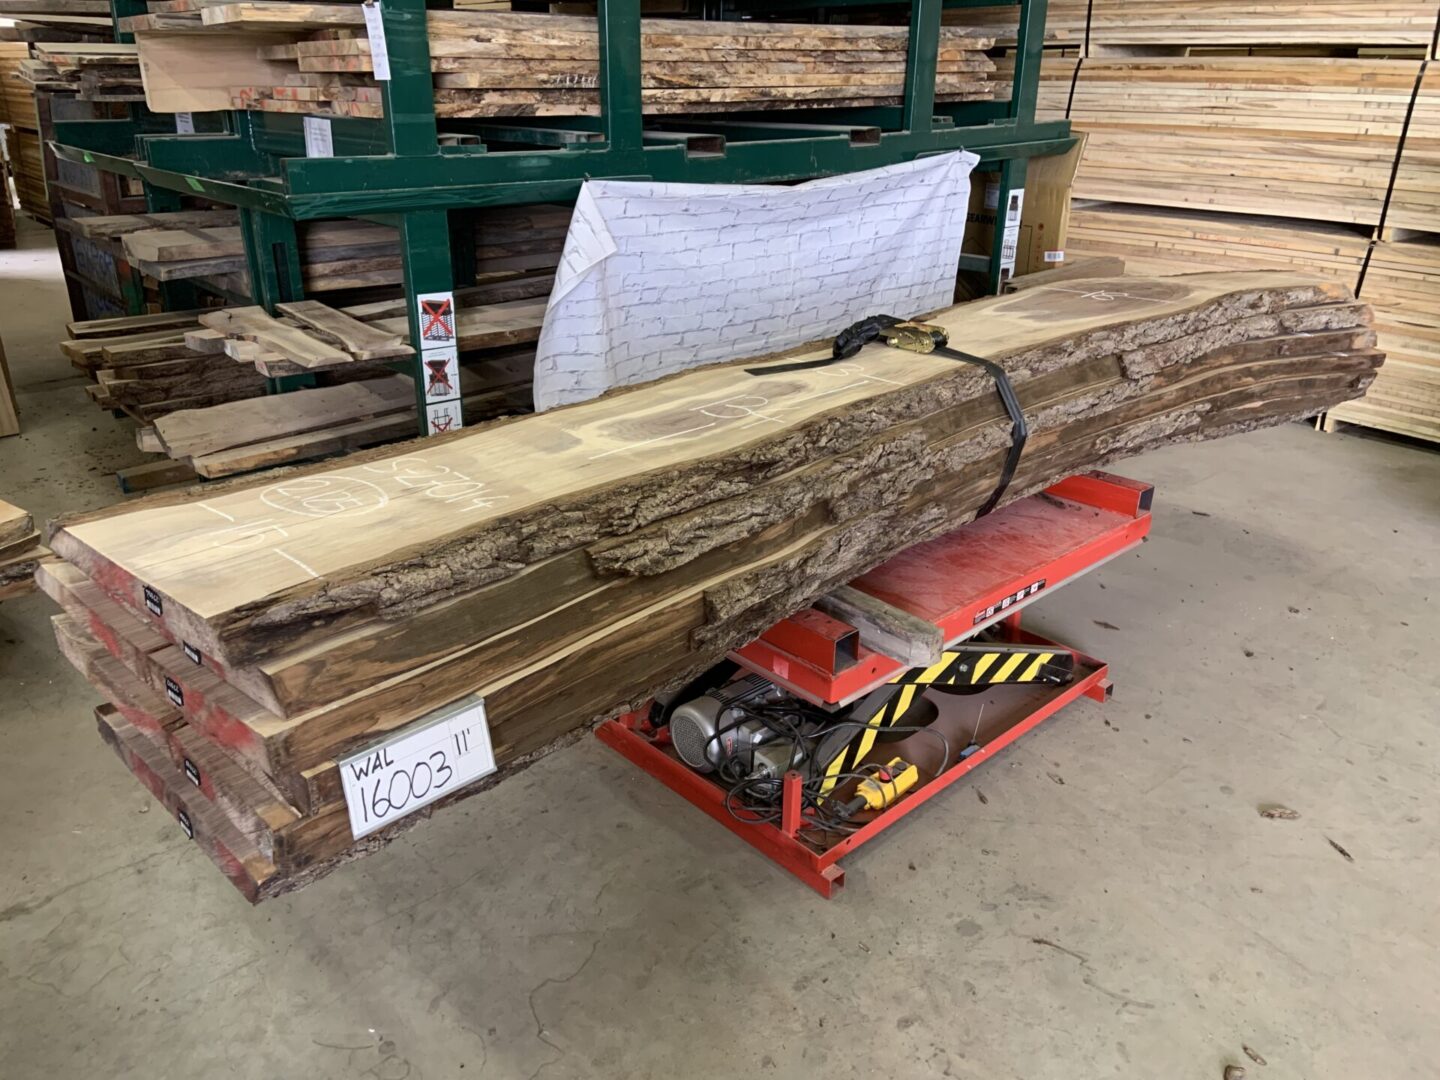 A Bundle of Walnut Logs 16003, Eight to Twelve Feet